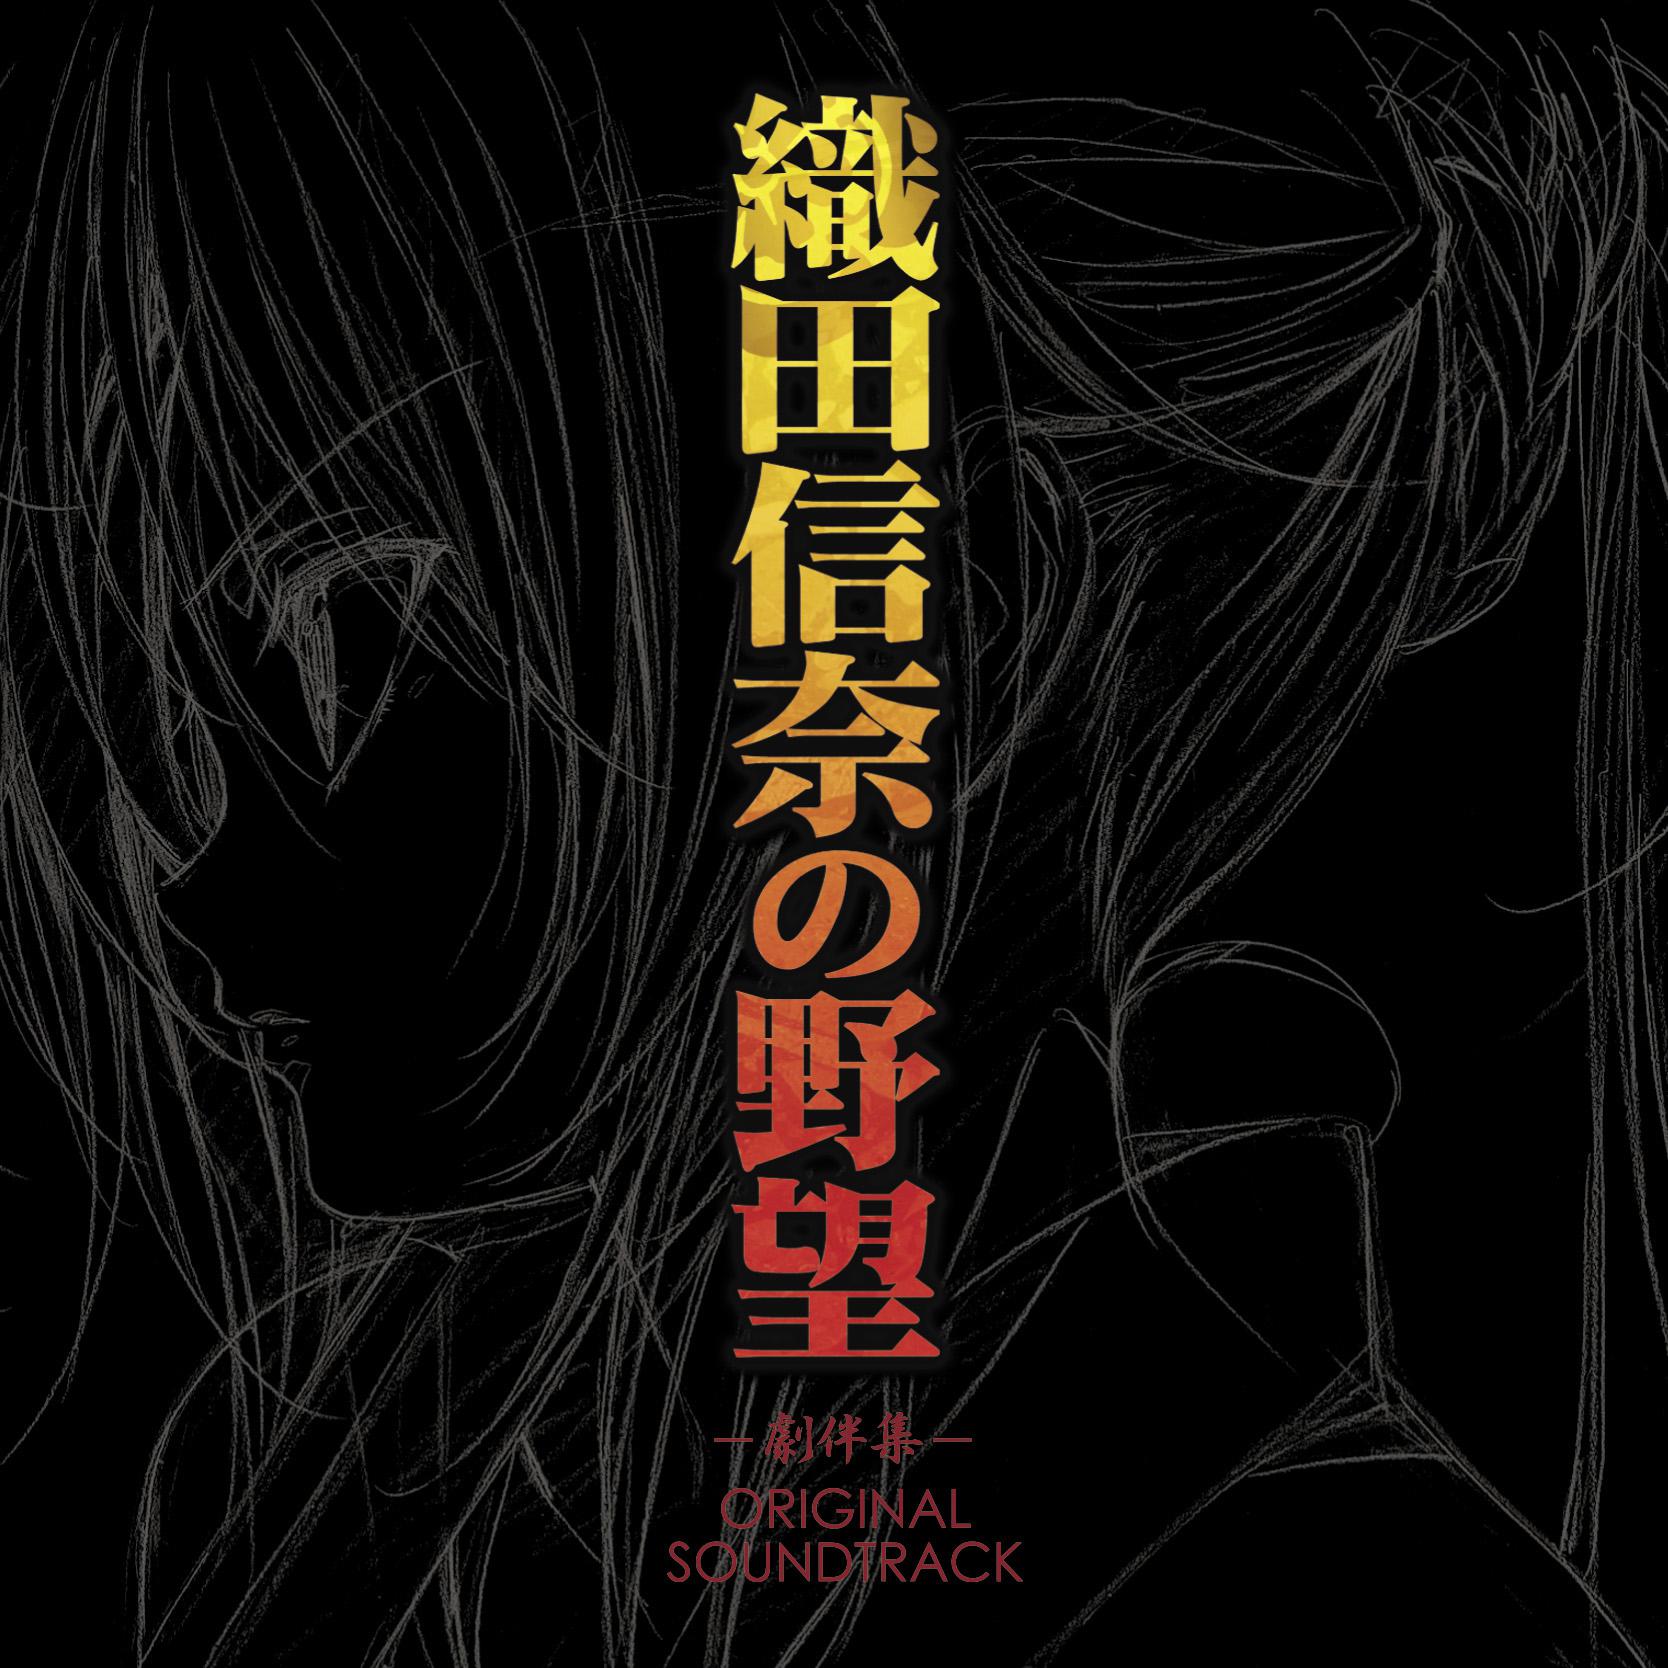 TVアニメ「織田信奈の野望」オリジナルサウンドトラックアルバム专辑